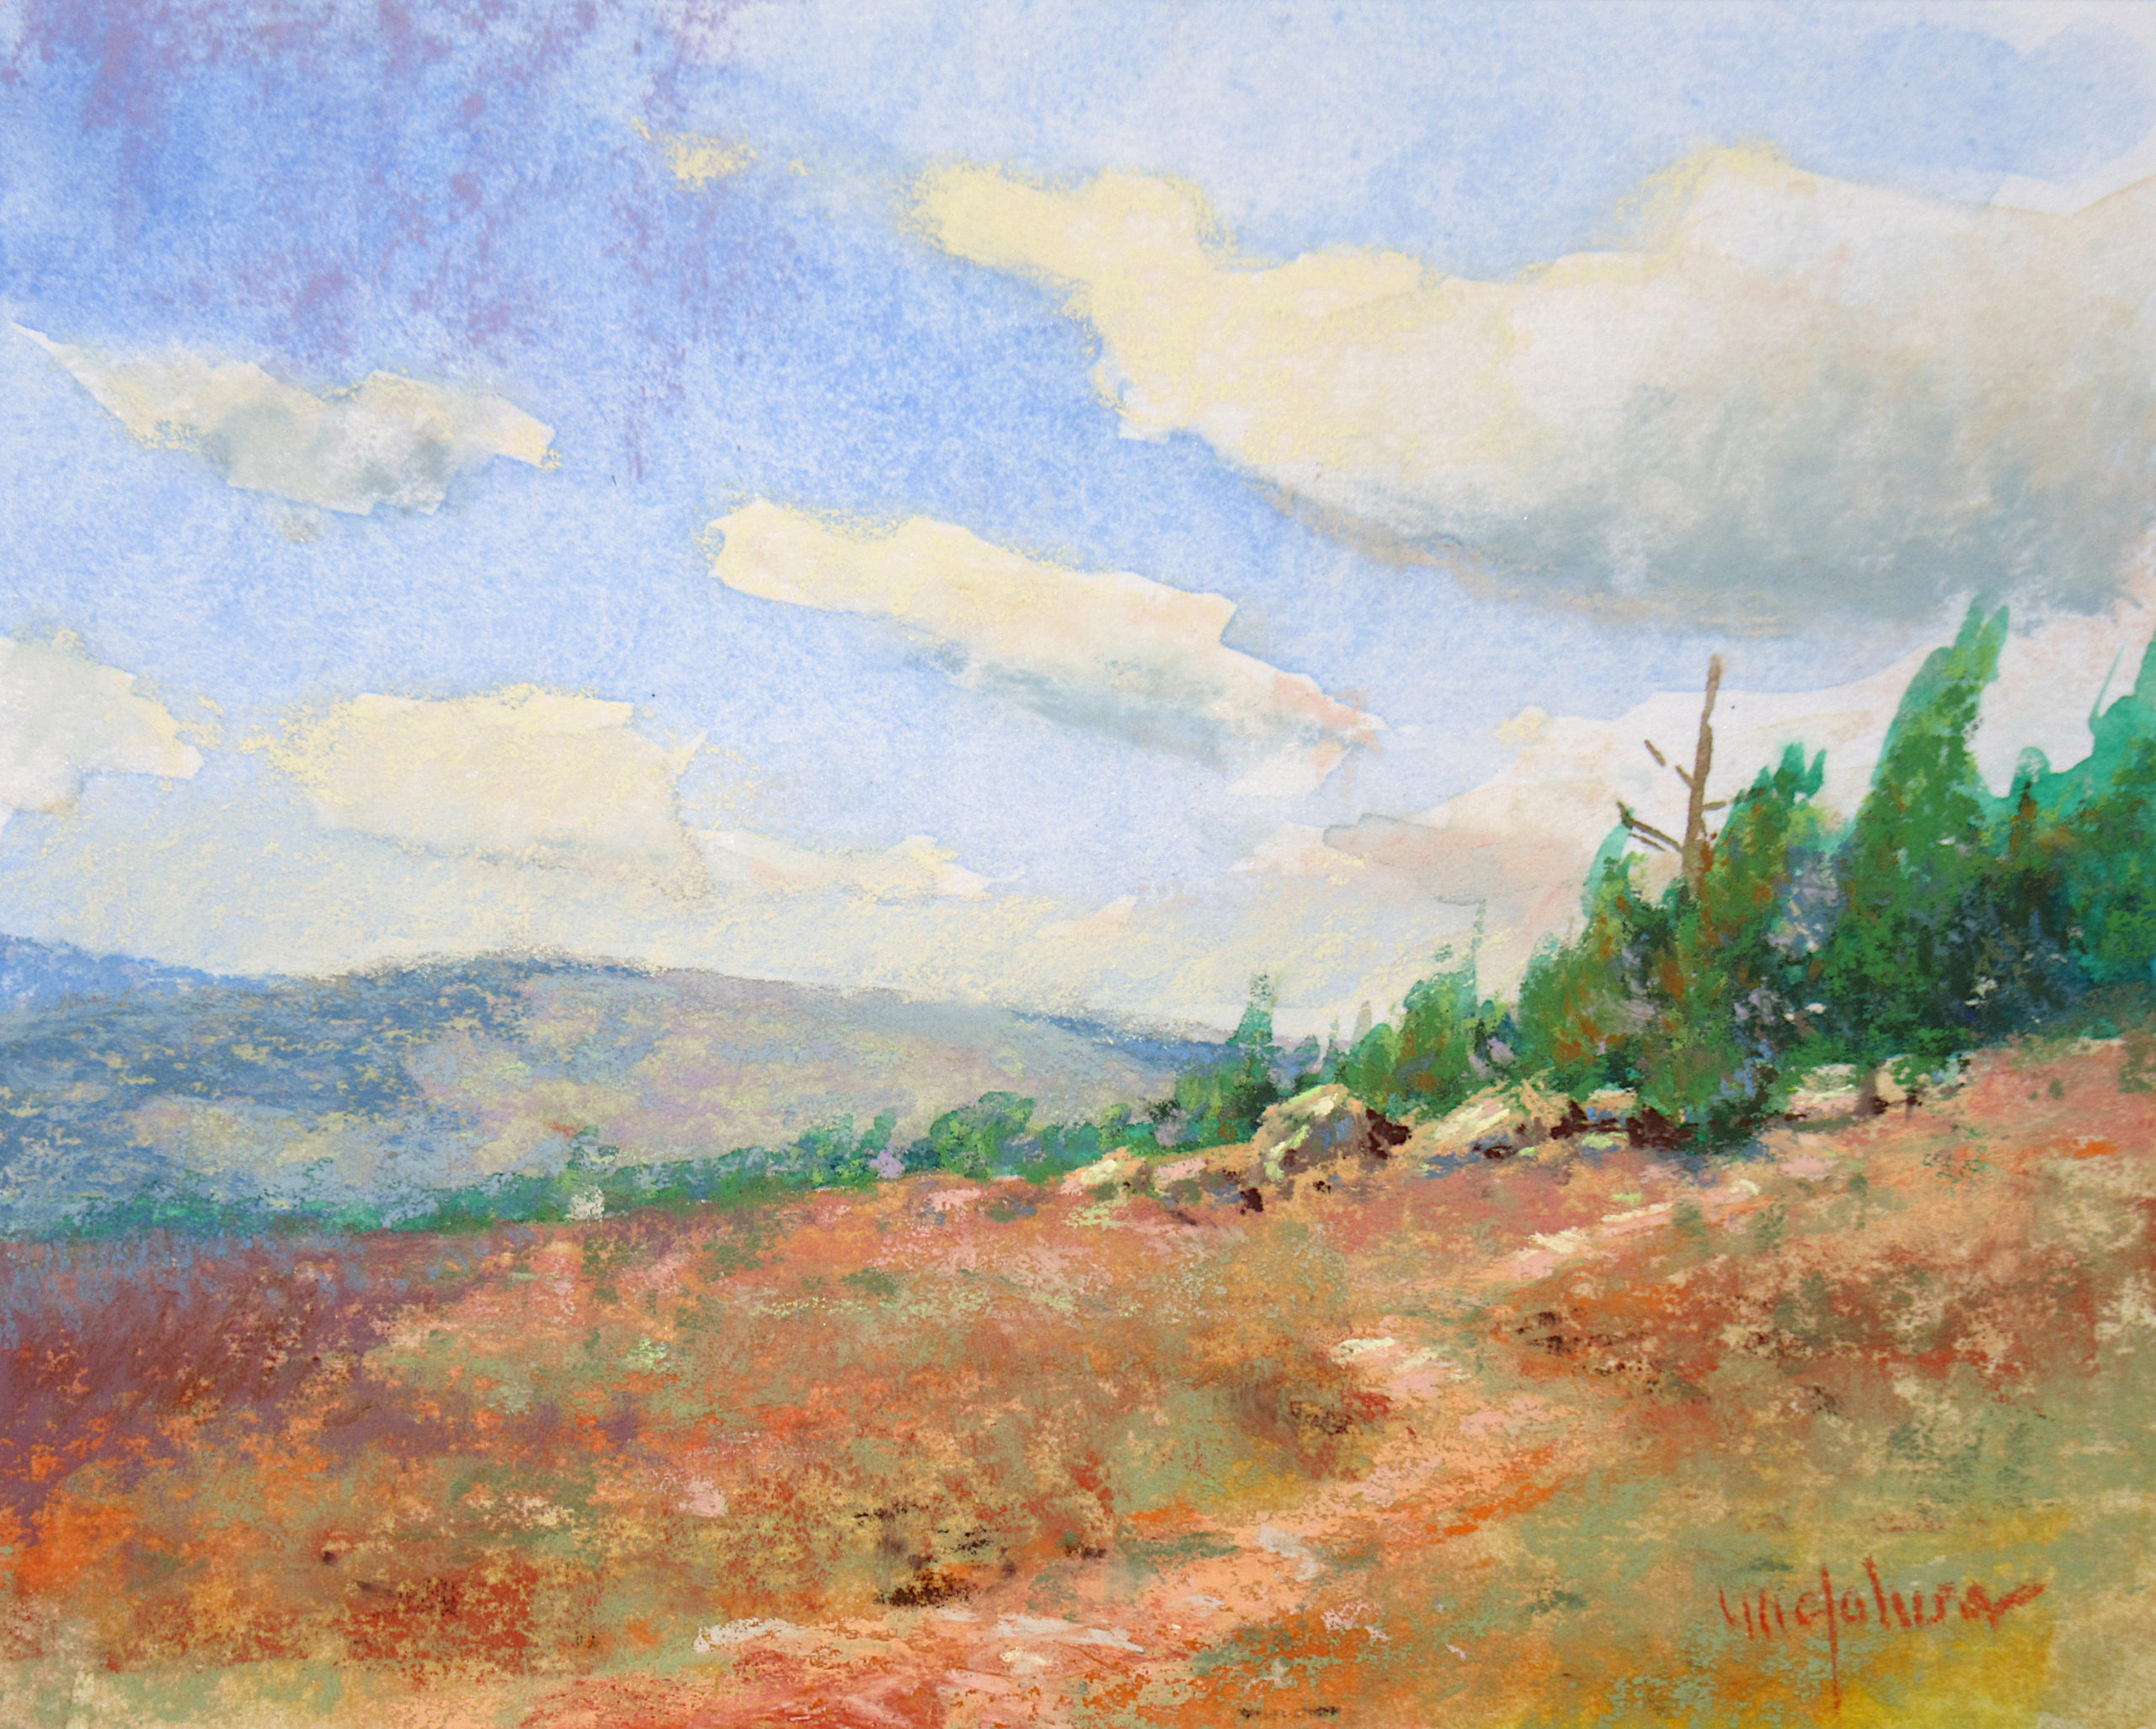 Michael Chesley Johnson, "Hillside," 9x12 pastel and gouache, en plein air